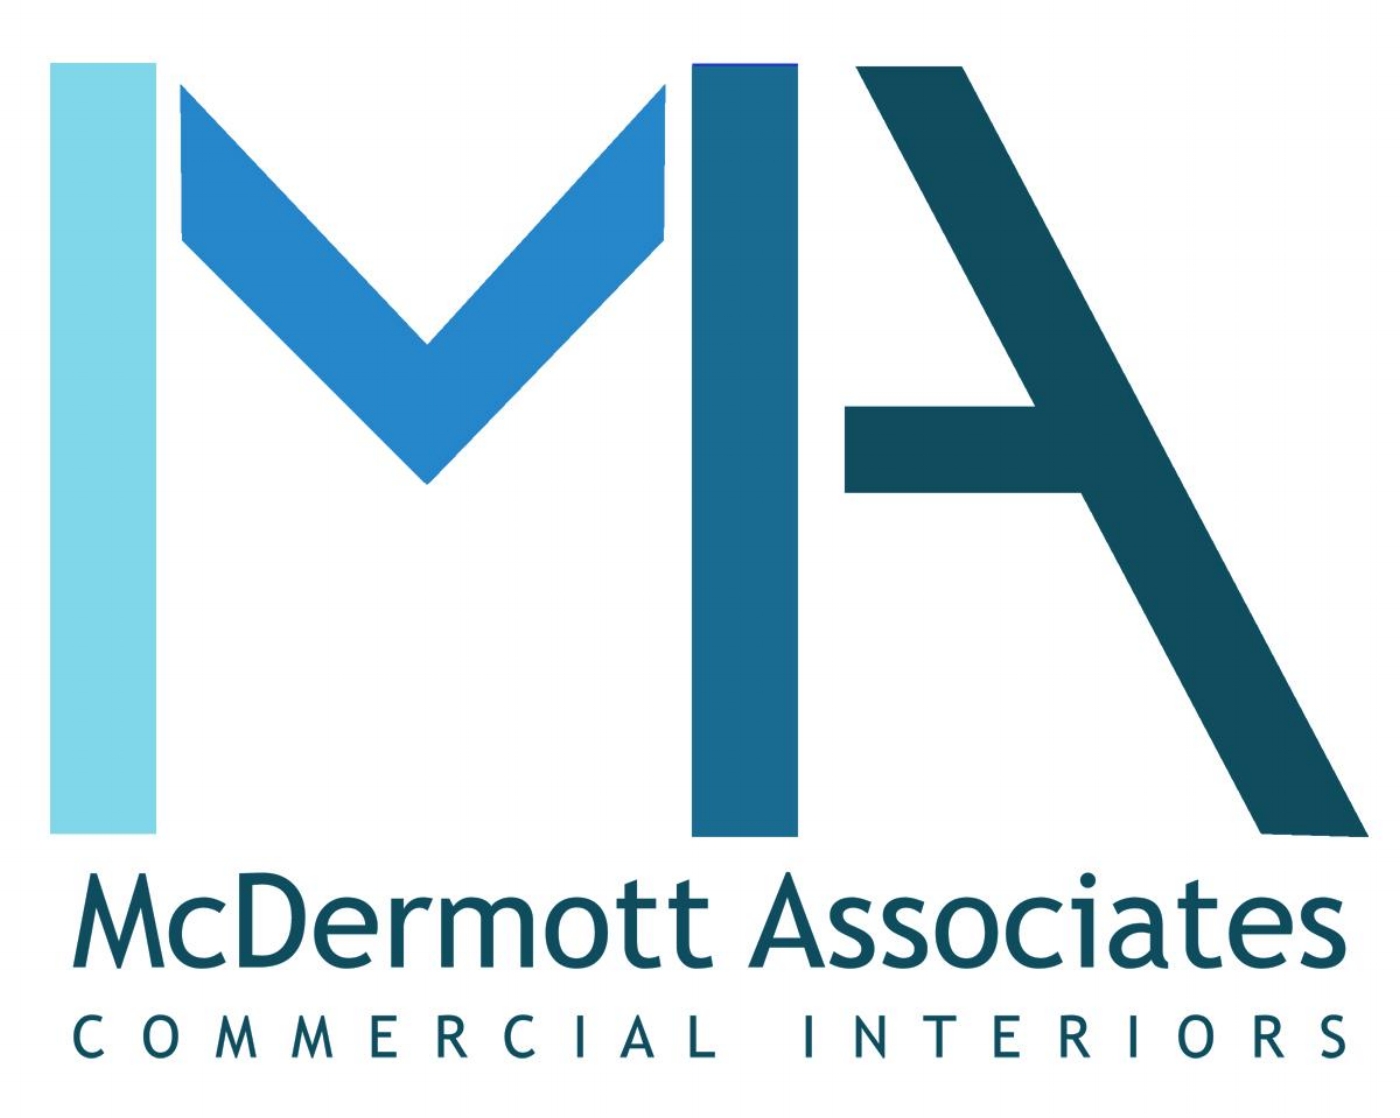 McDermott Associates Commercial Interior Architecture